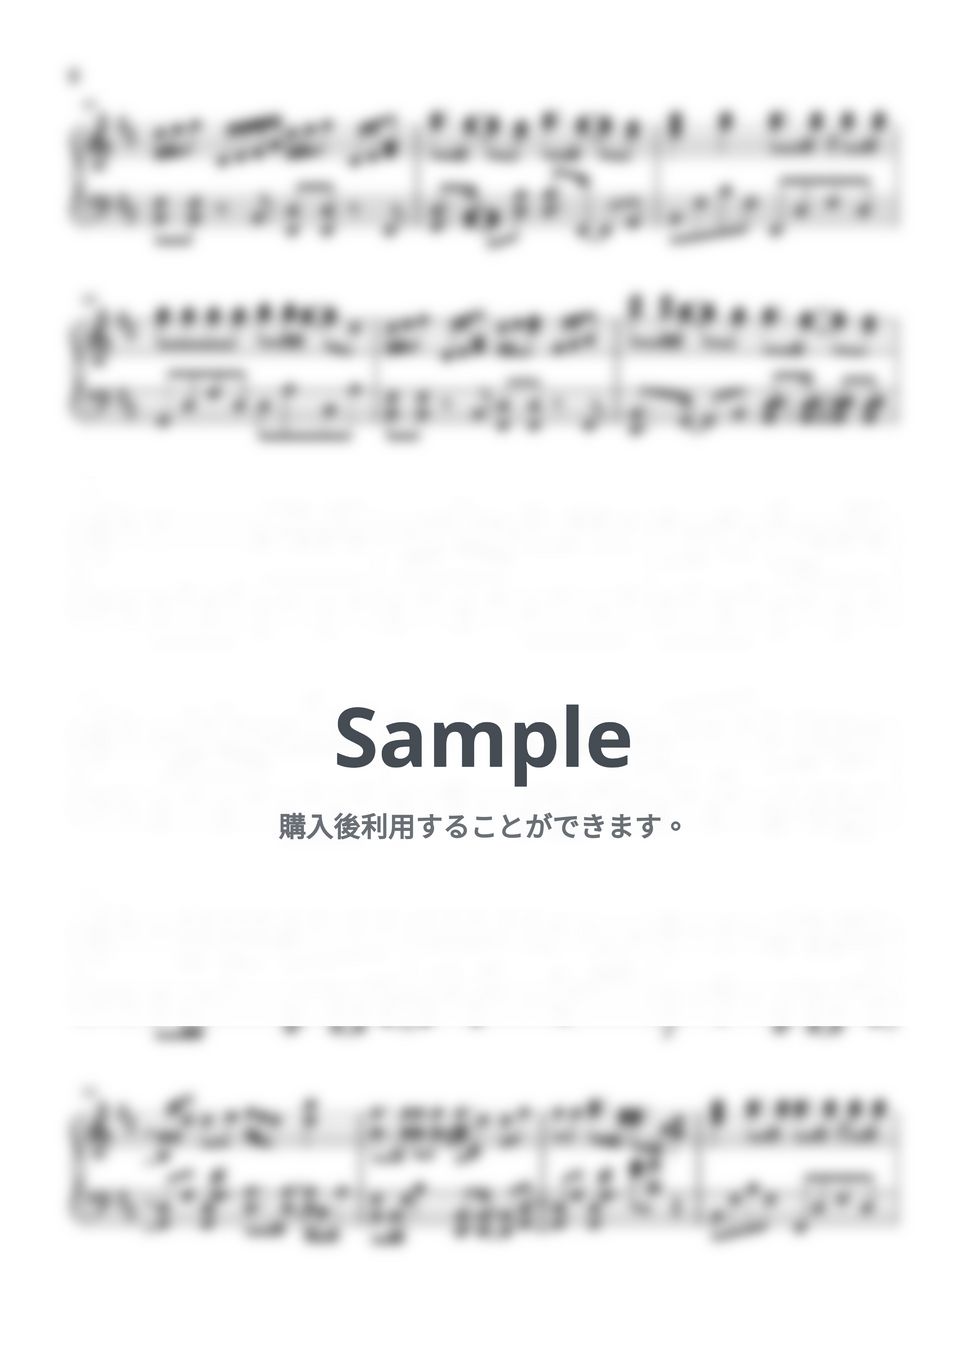 Mrs. GREEN APPLE - アンラブレス (intermediate, piano) by Mopianic